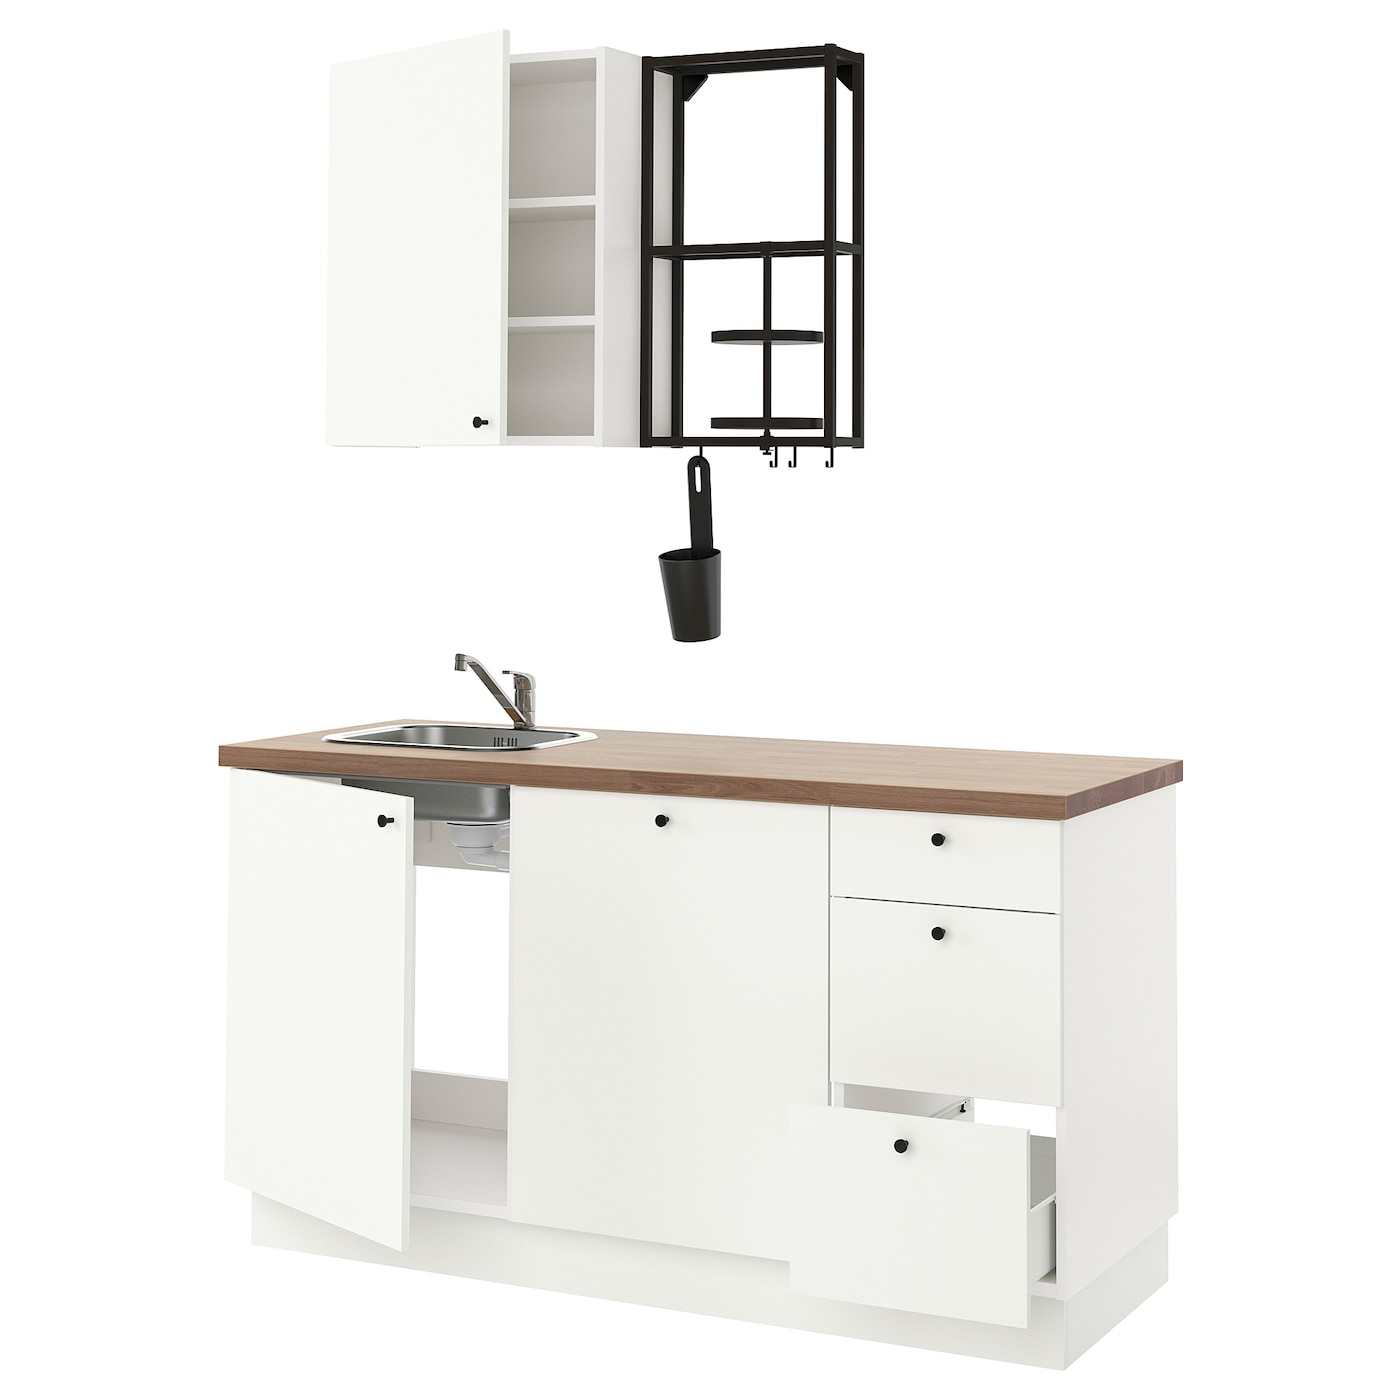 Кухонная комбинация для хранения - ENHET  IKEA/ ЭНХЕТ ИКЕА, 163х63,5х222 см, белый/бежевый